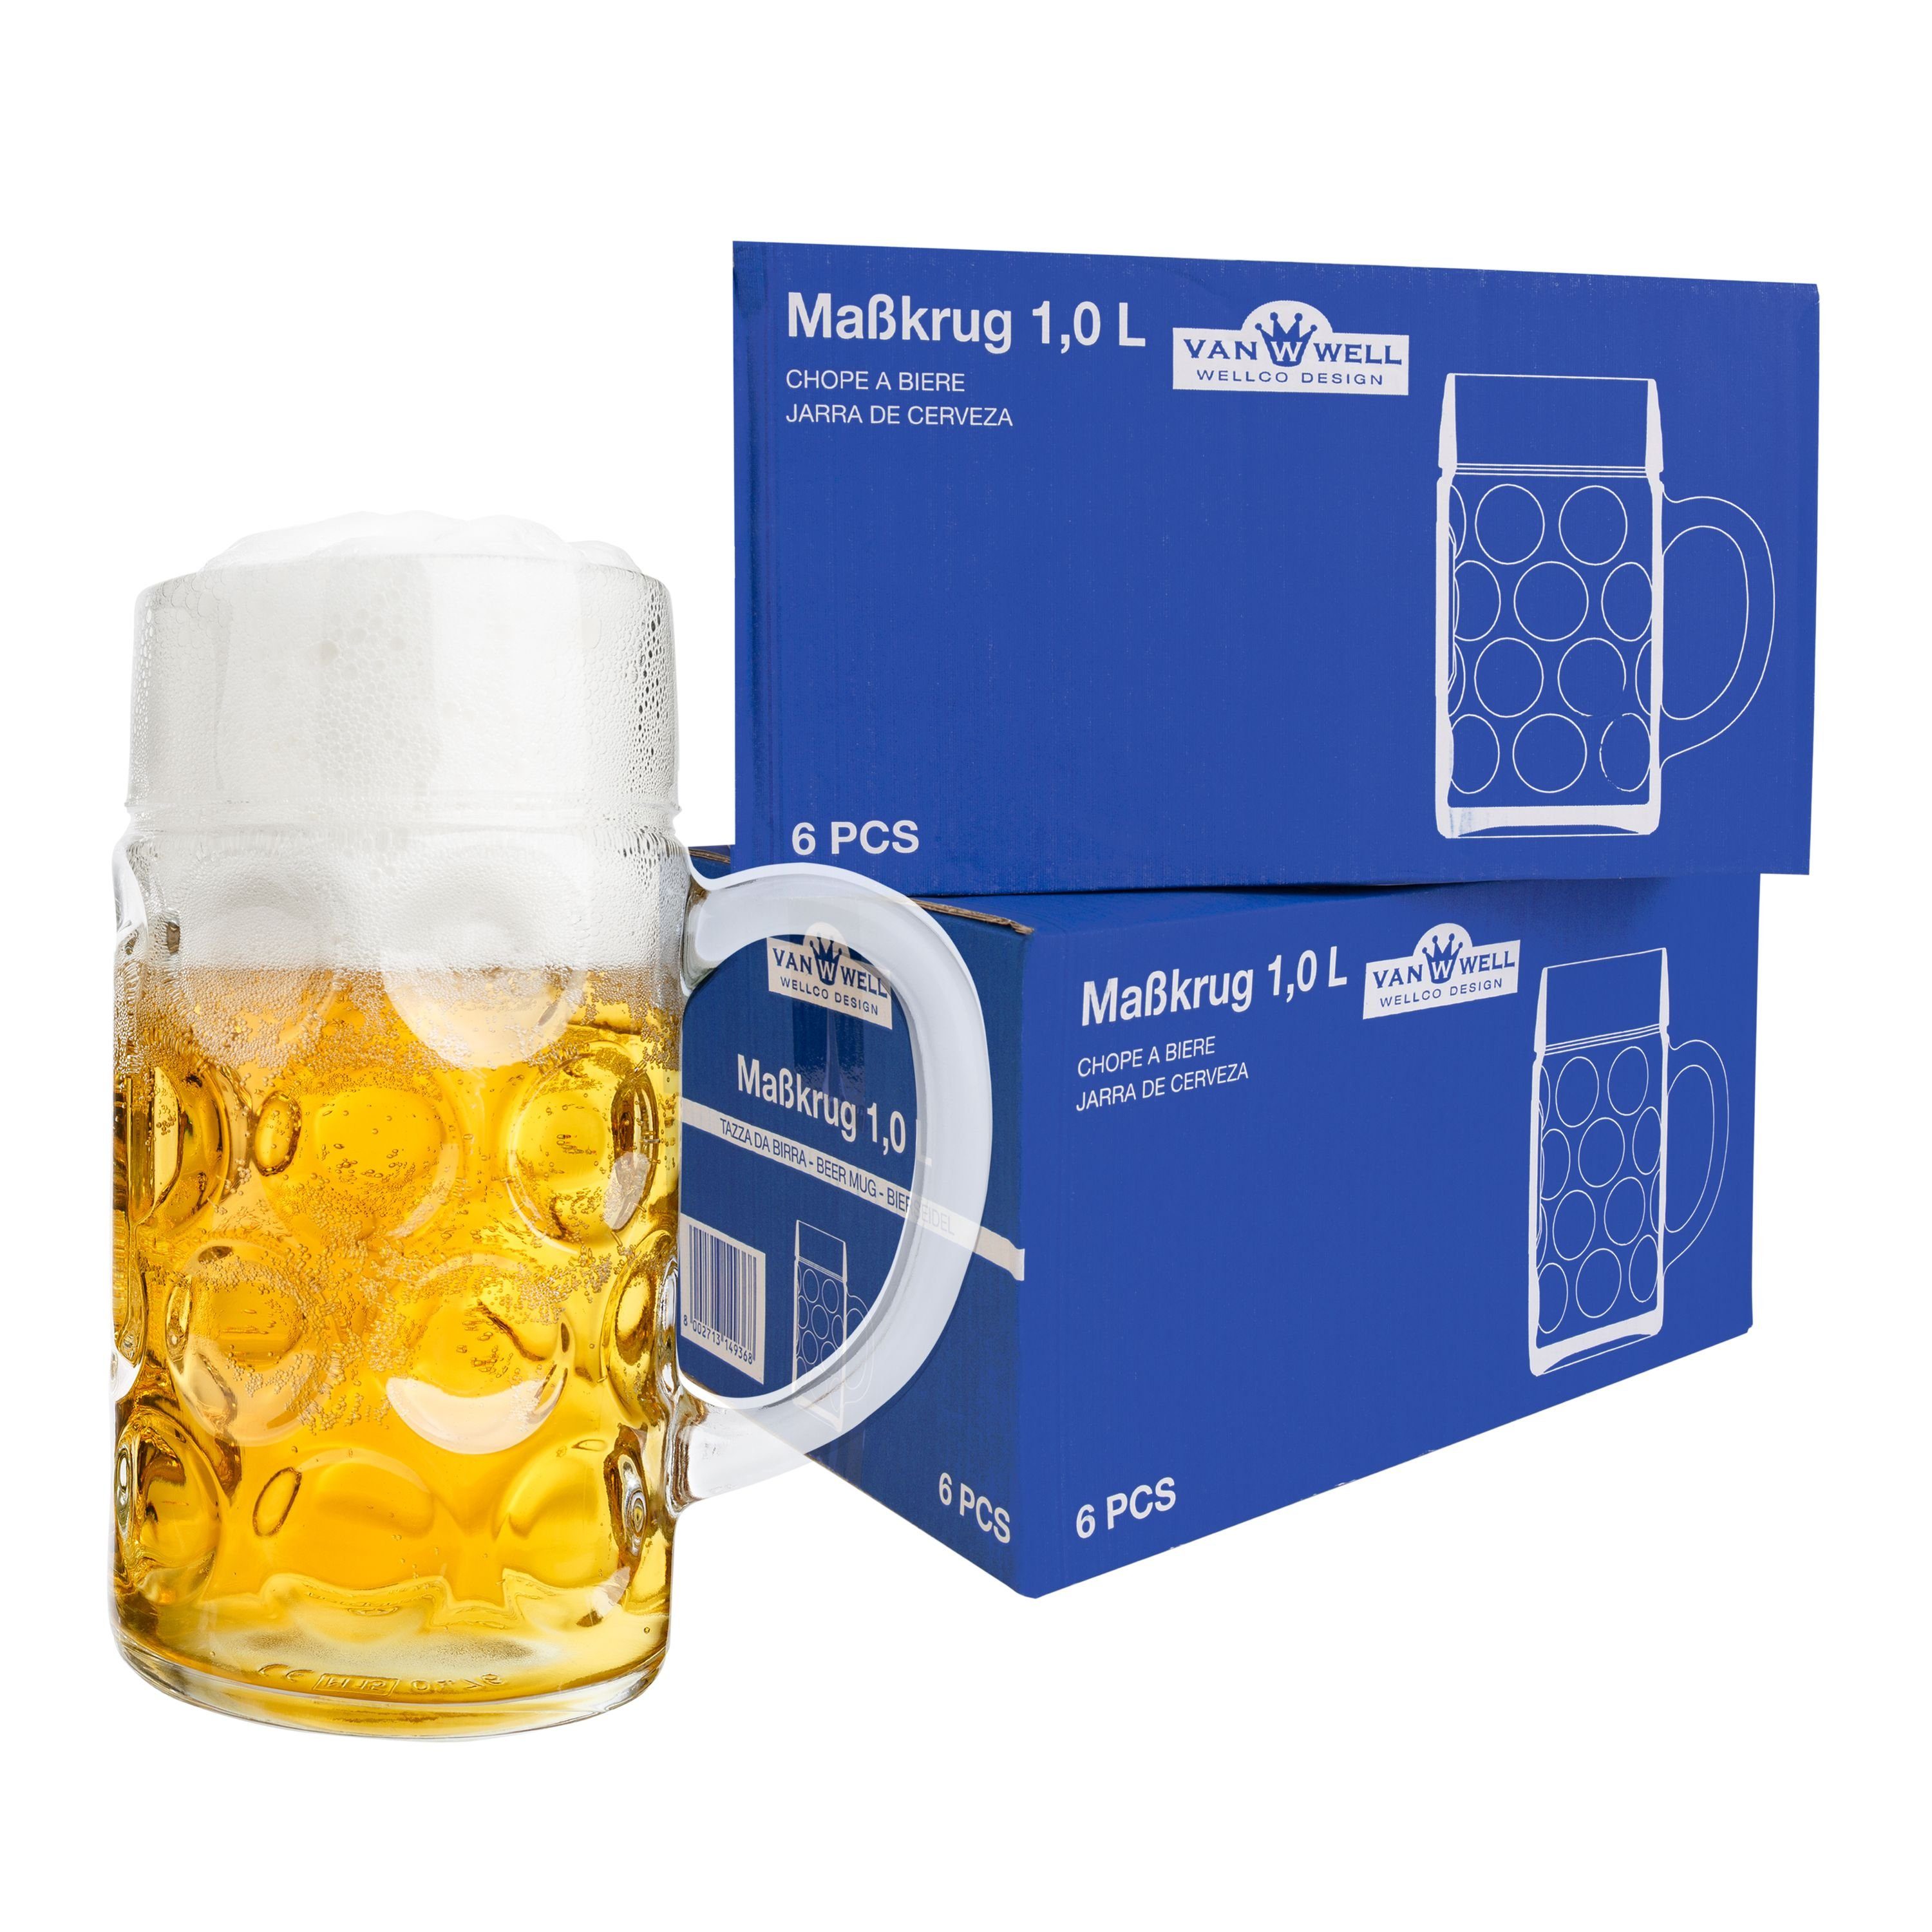 van Well Bierglas 12er Set Maßkrug "Wellco" - 1 Liter Bierkrug aus Glas -  geeicht